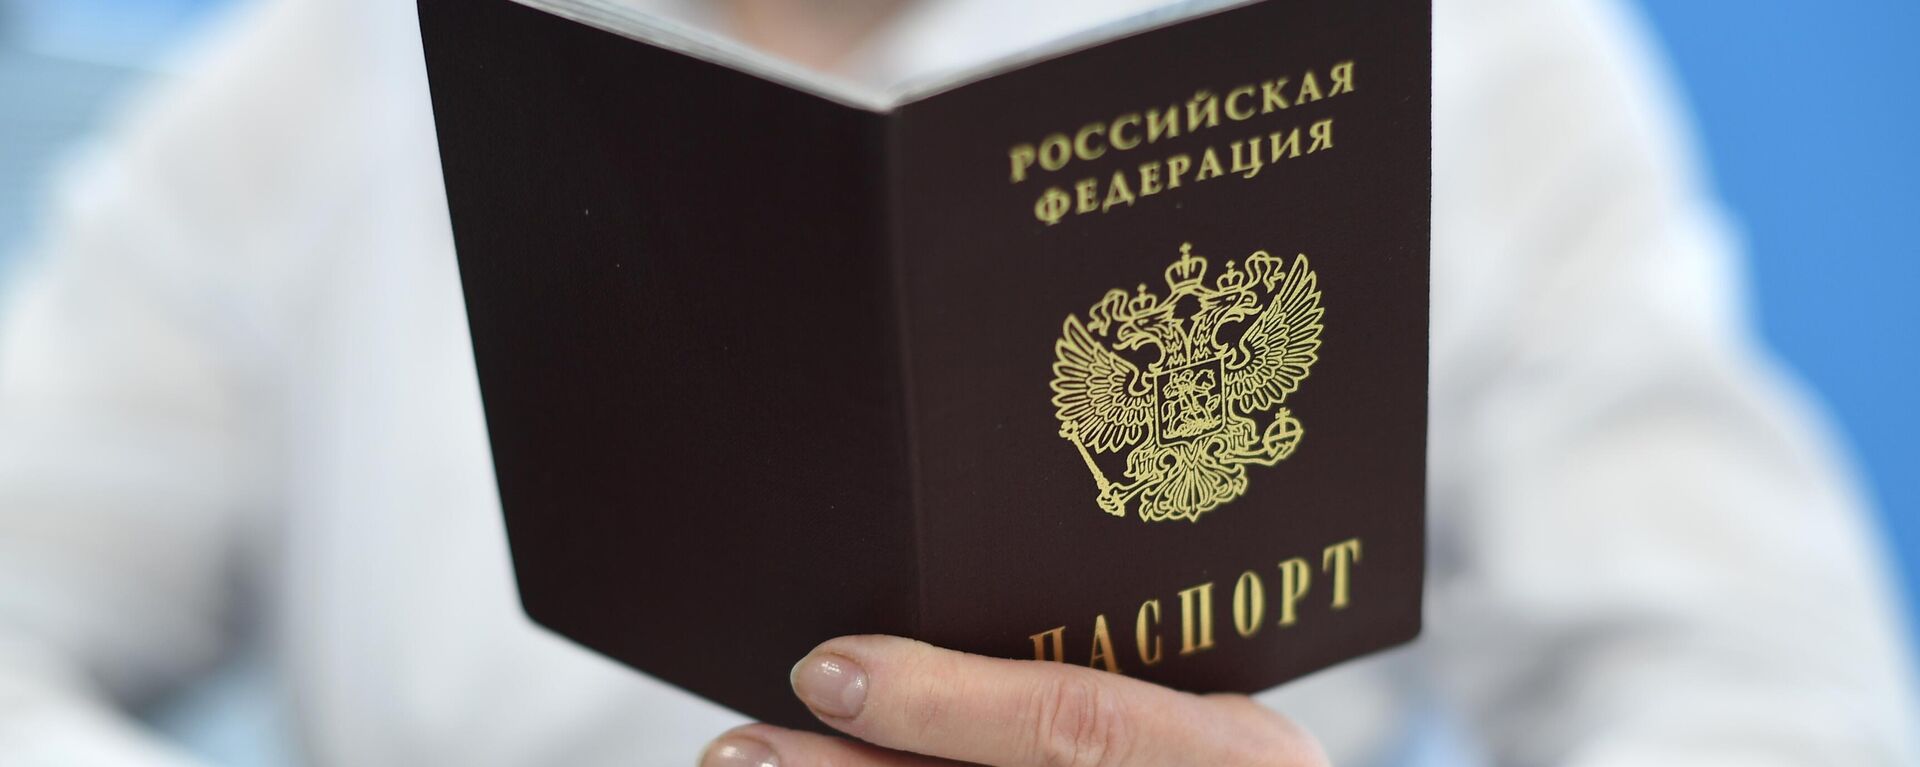 Паспорт гражданина России - Sputnik Узбекистан, 1920, 16.06.2021